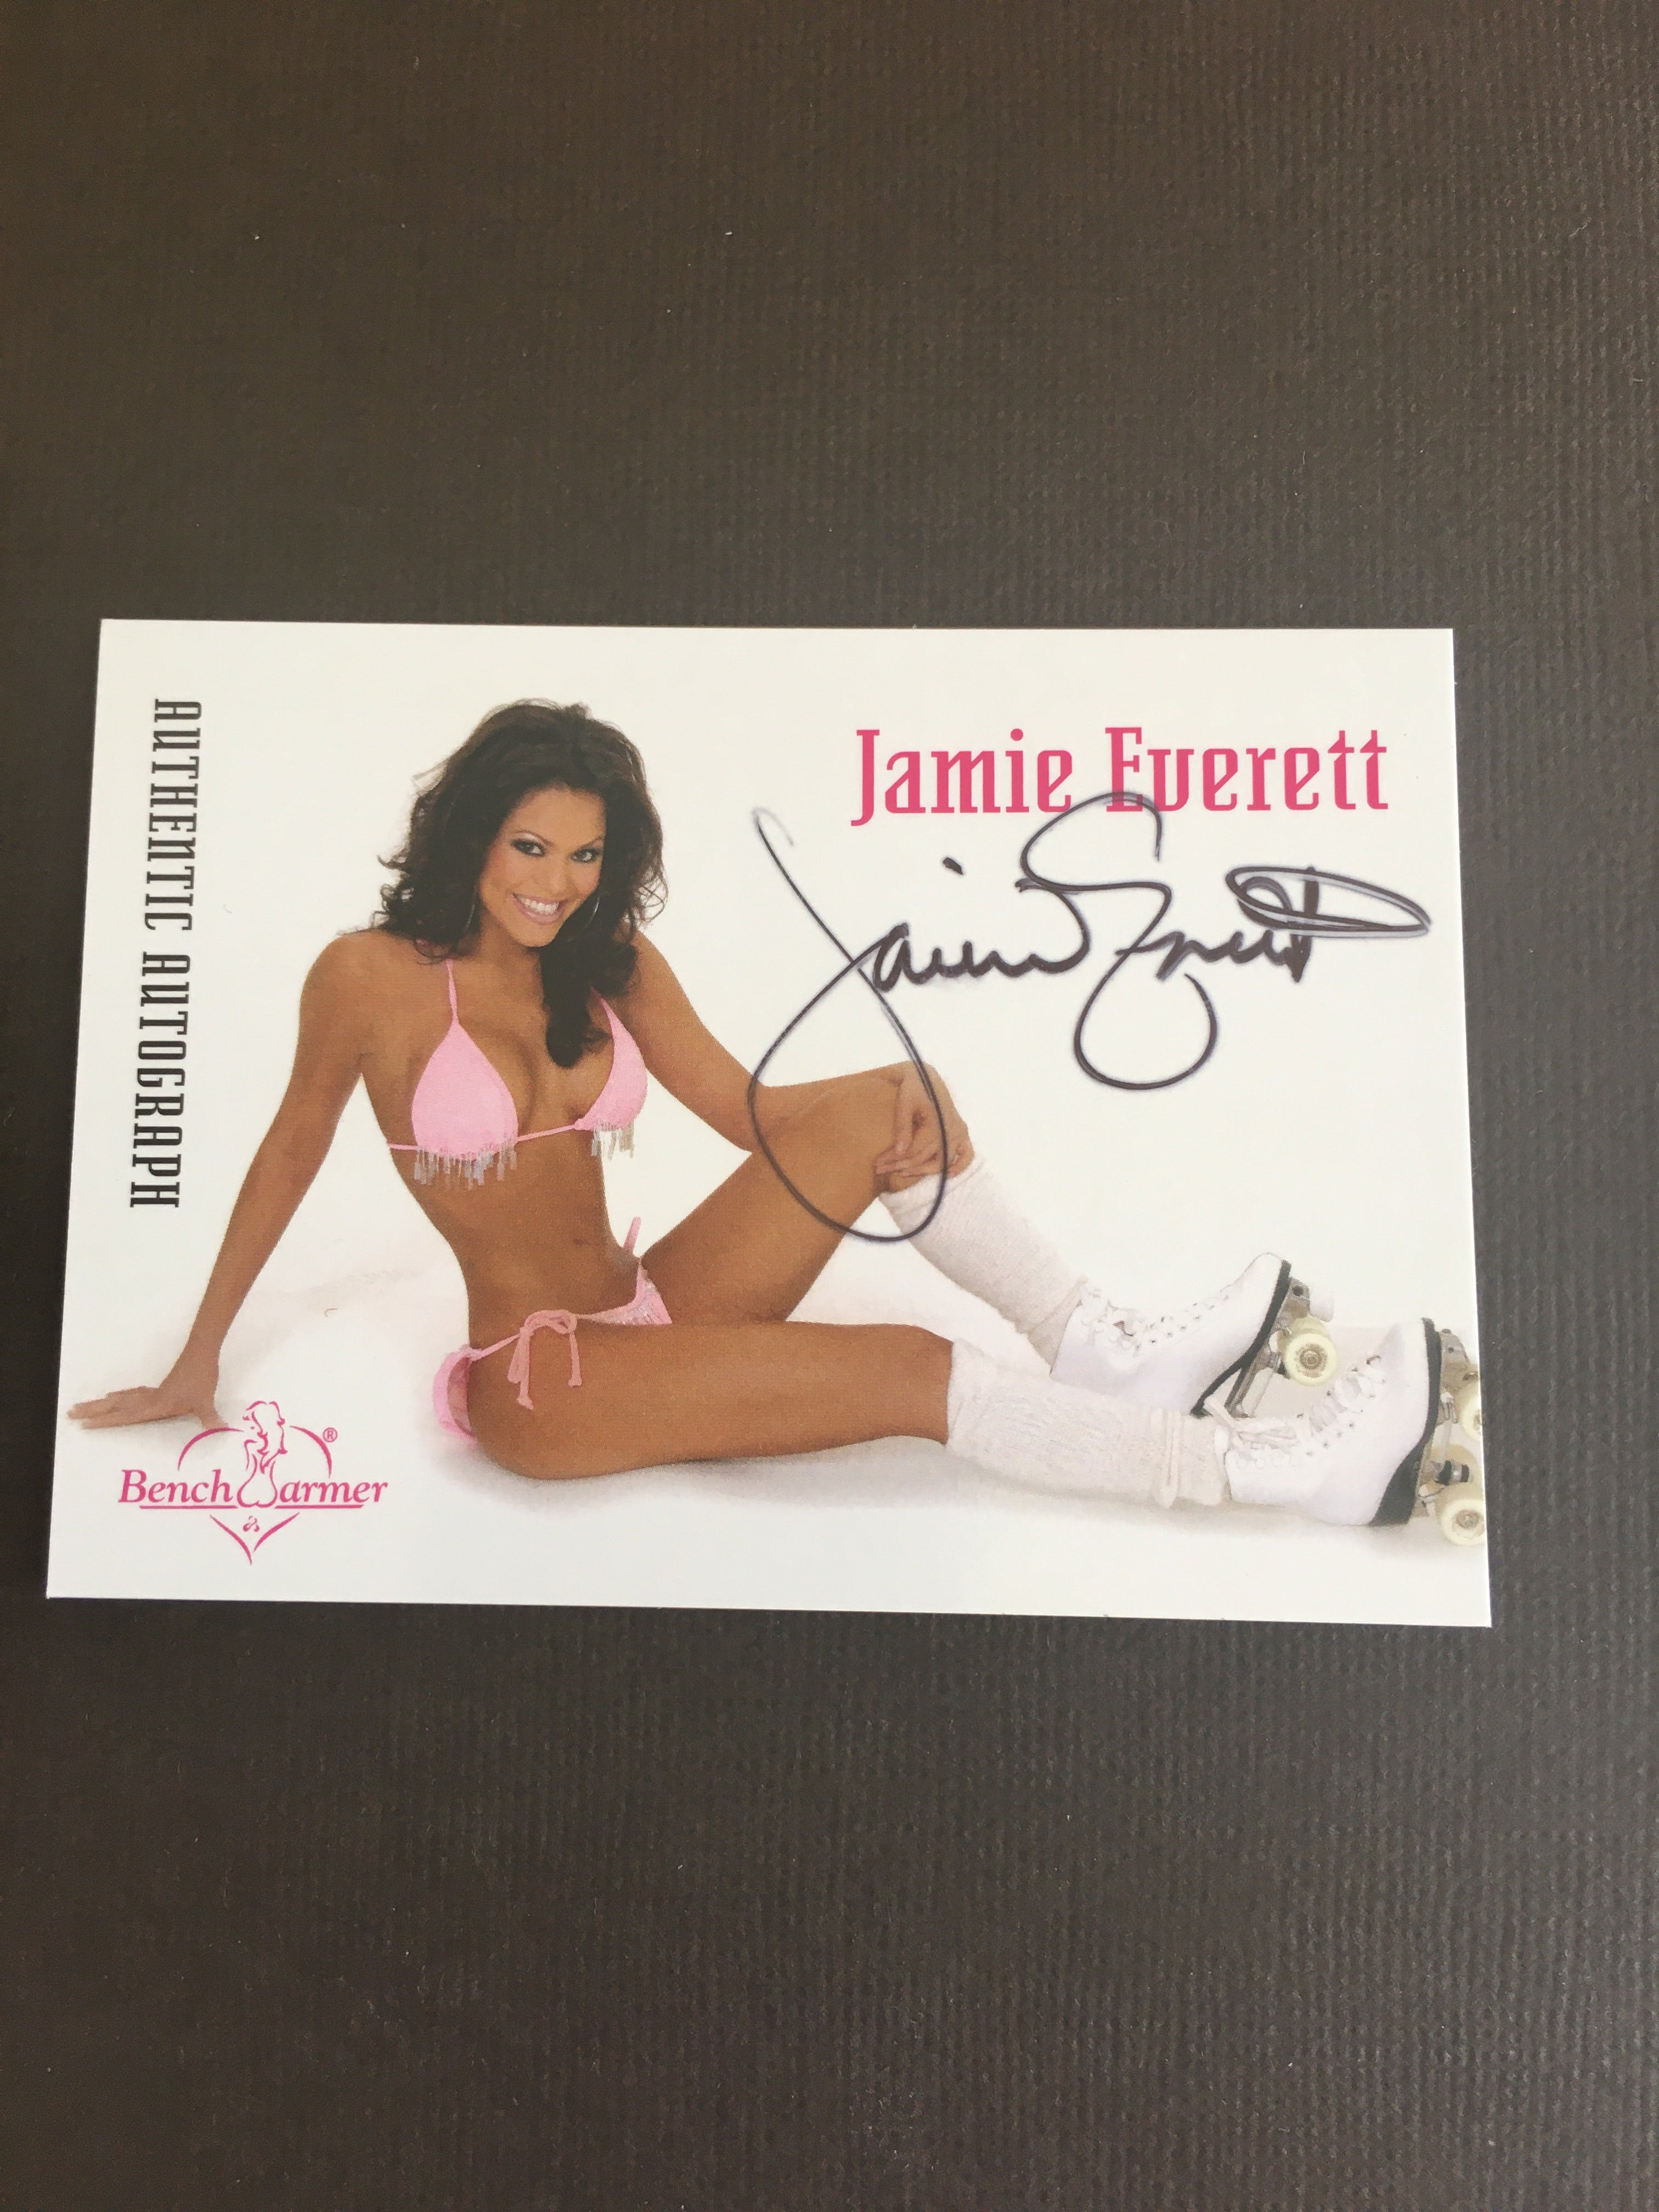 Jamie Everett - Autographed Benchwarmer Trading Card (1)